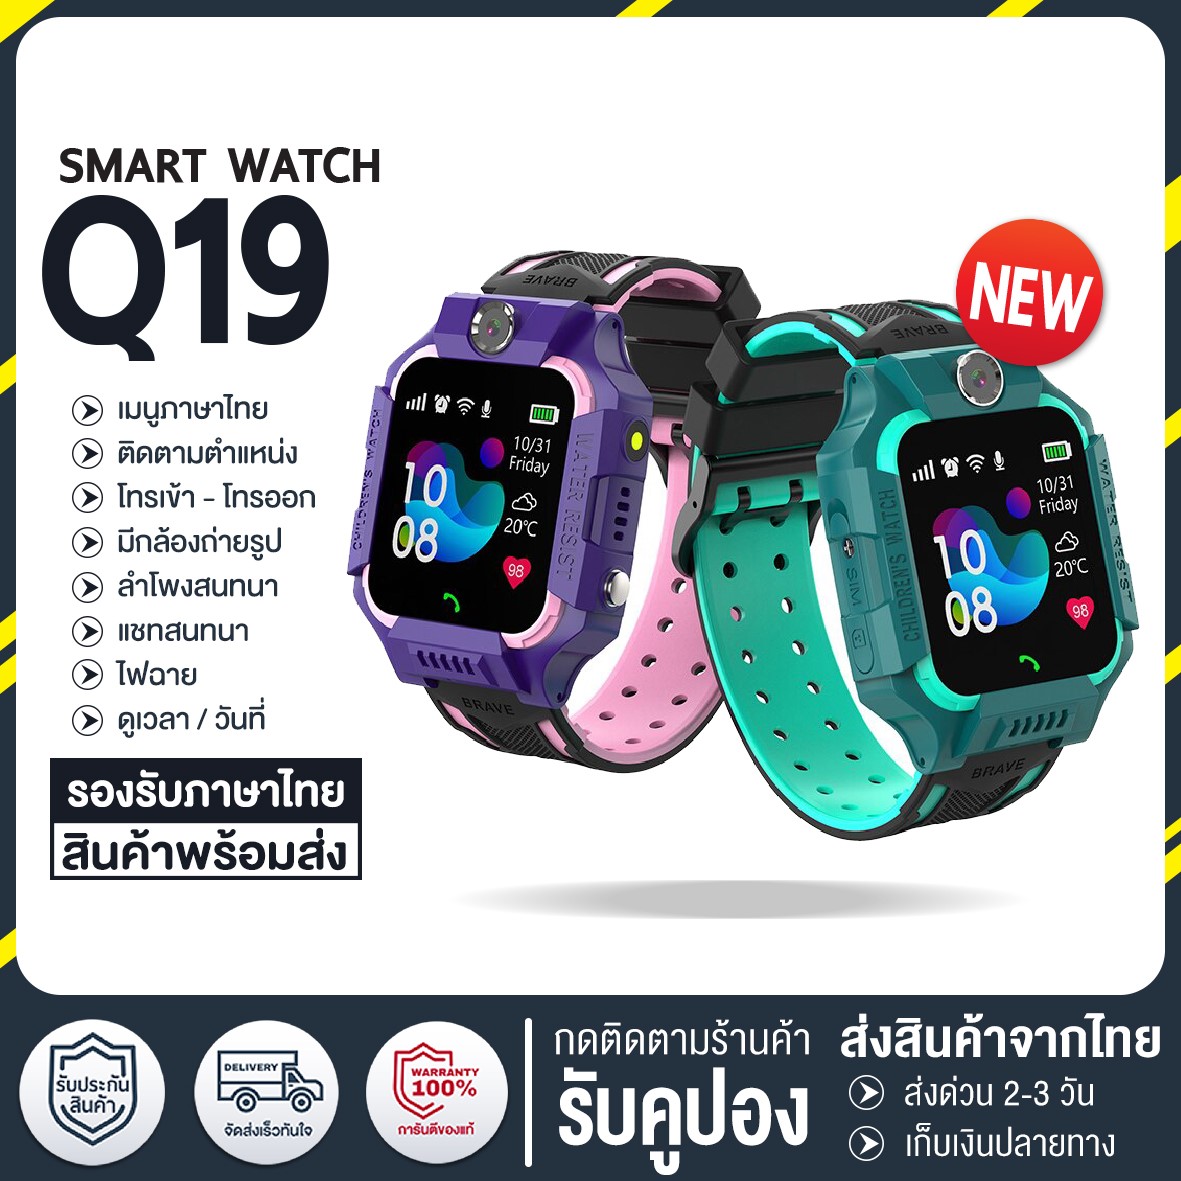 Smart Watch Q19 เมนูไทย นาฬิกาเด็ก นาฬิกา สมาร์ทวอท นาฬิกาสมาร์ทวอทช์ ใส่ซิมได้ นาฬิกาไอโม่ aimo imo ภาษาไทย ถ่ายรูป สมาร์ทวอท ไอโม่ ไฟฉาย โทรได้ แจ้งเตือนข้อความ GPS ติดตามตำแหน่ง Q19 ของเด็ก [พร้อมส่ง!]